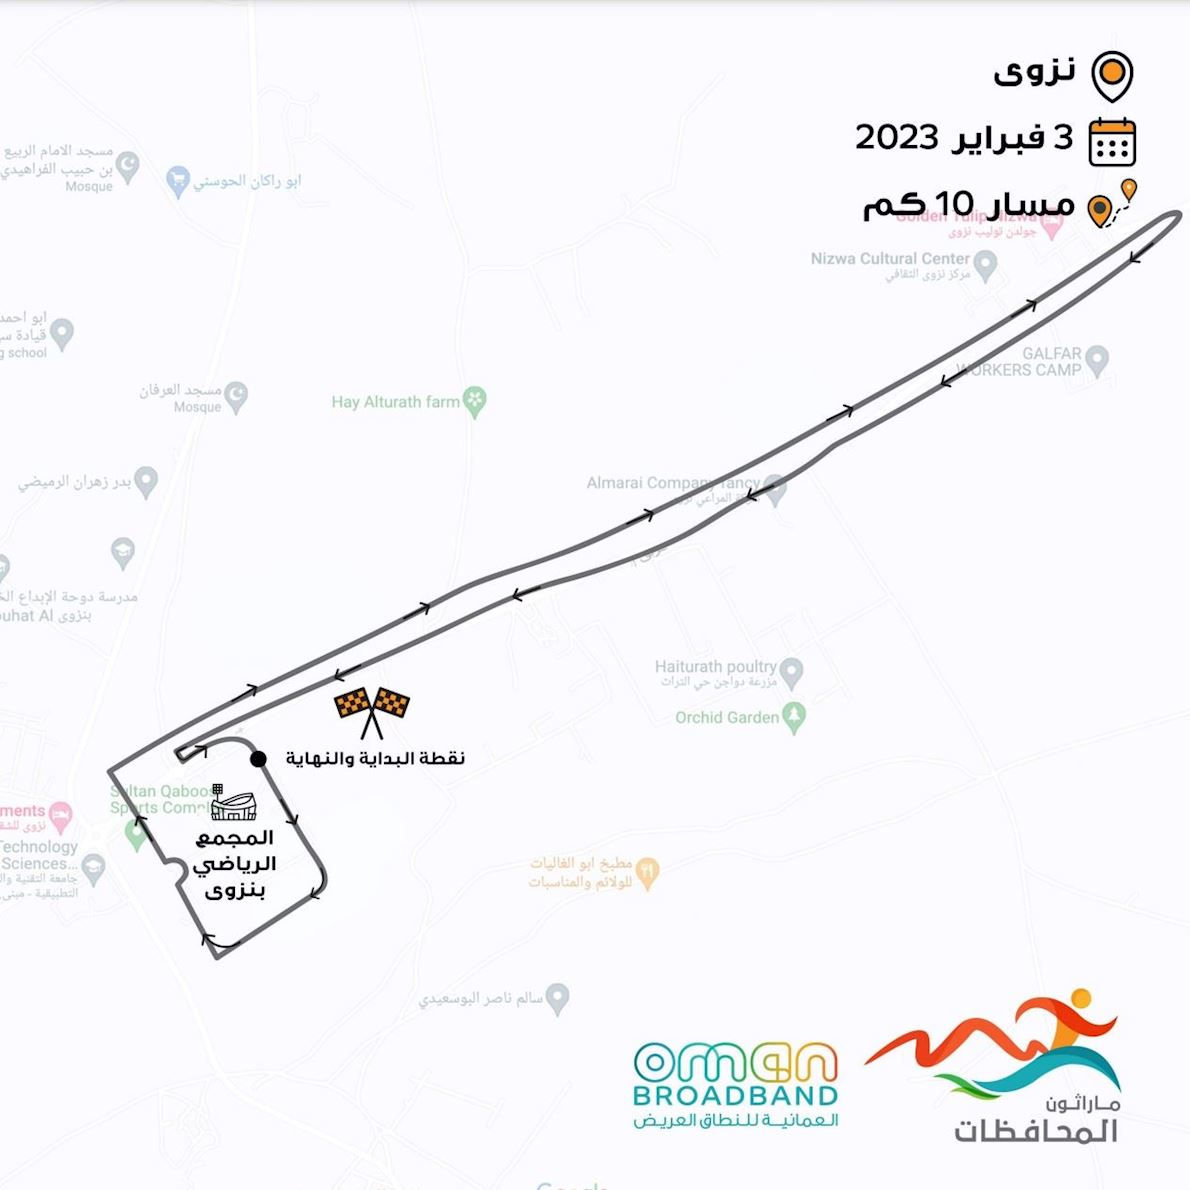 Oman Broadband Governorates Marathon ITINERAIRE